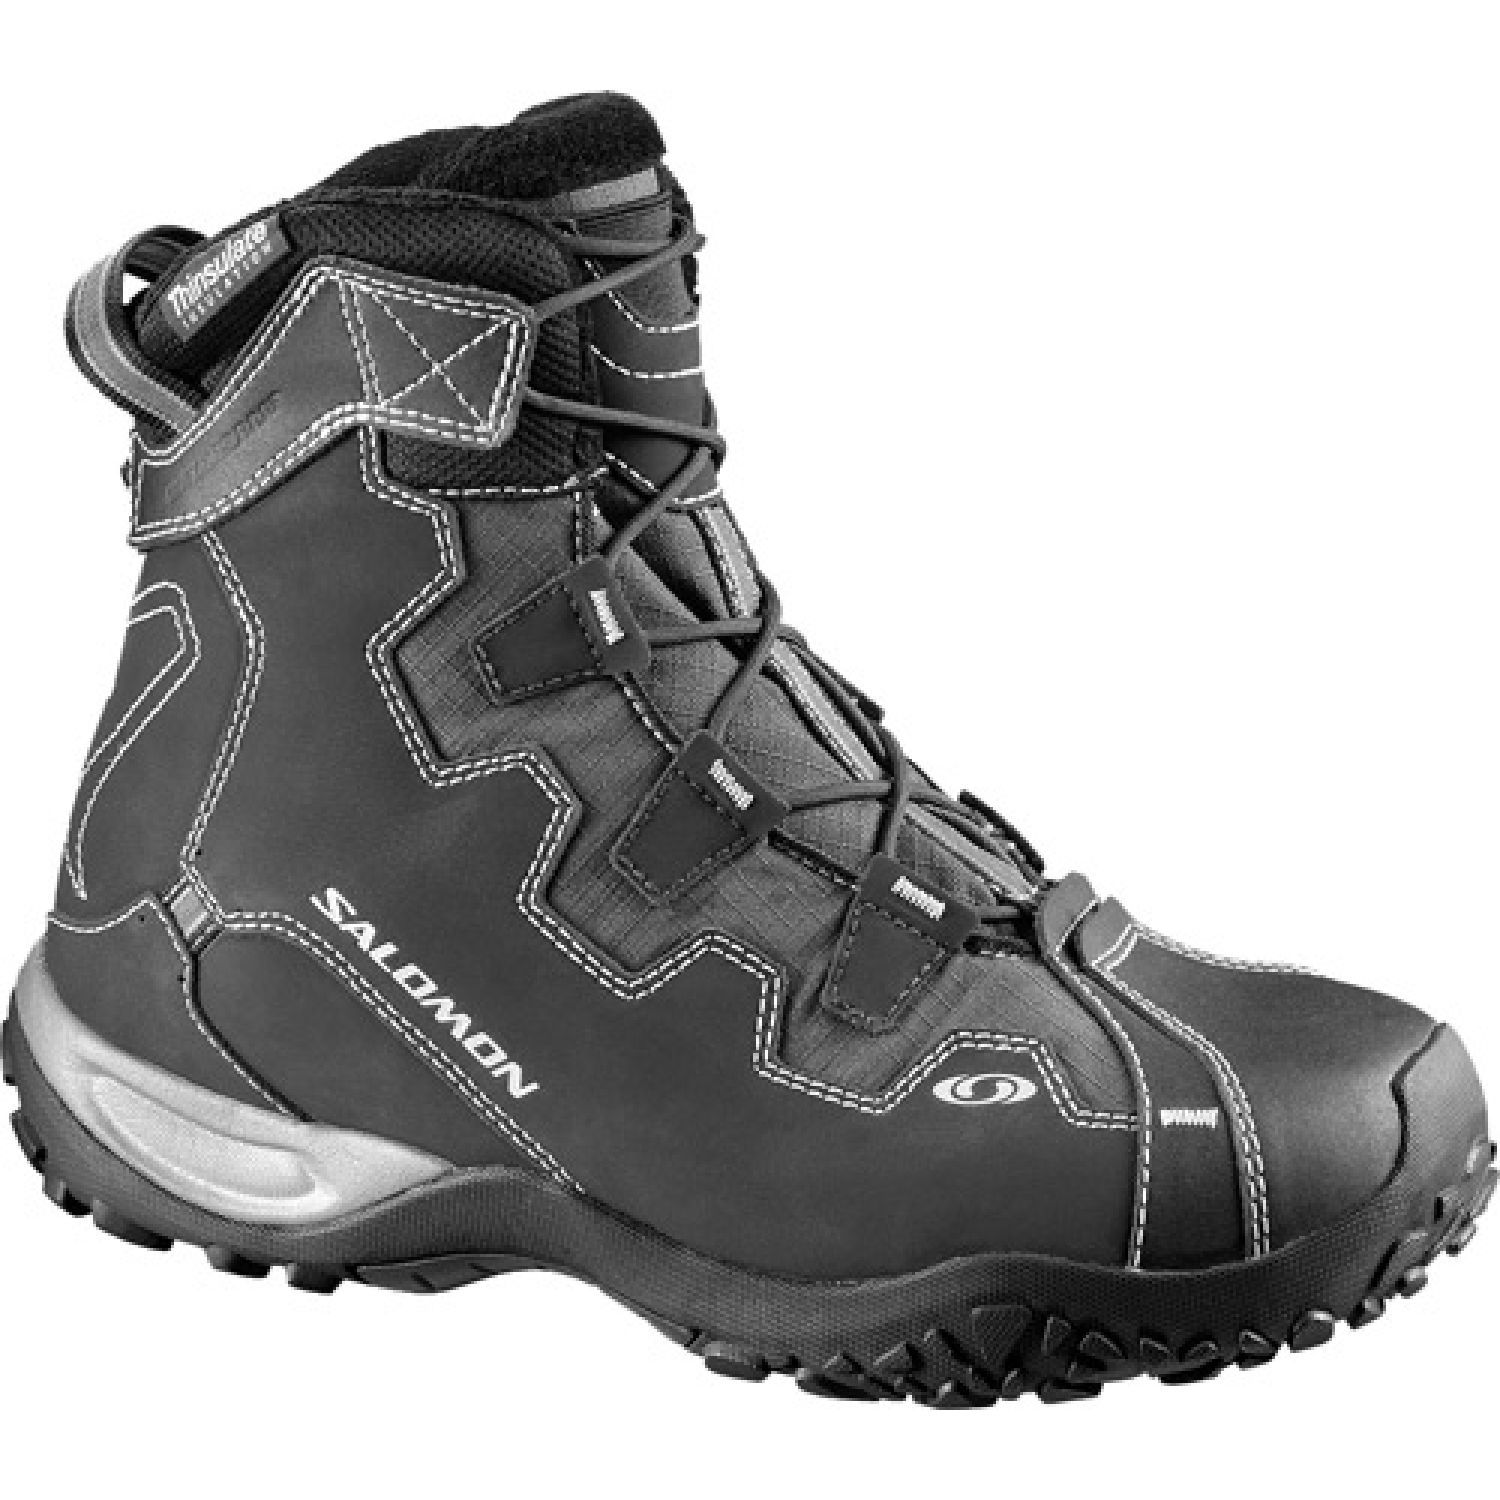 salomon thinsulate waterproof boots